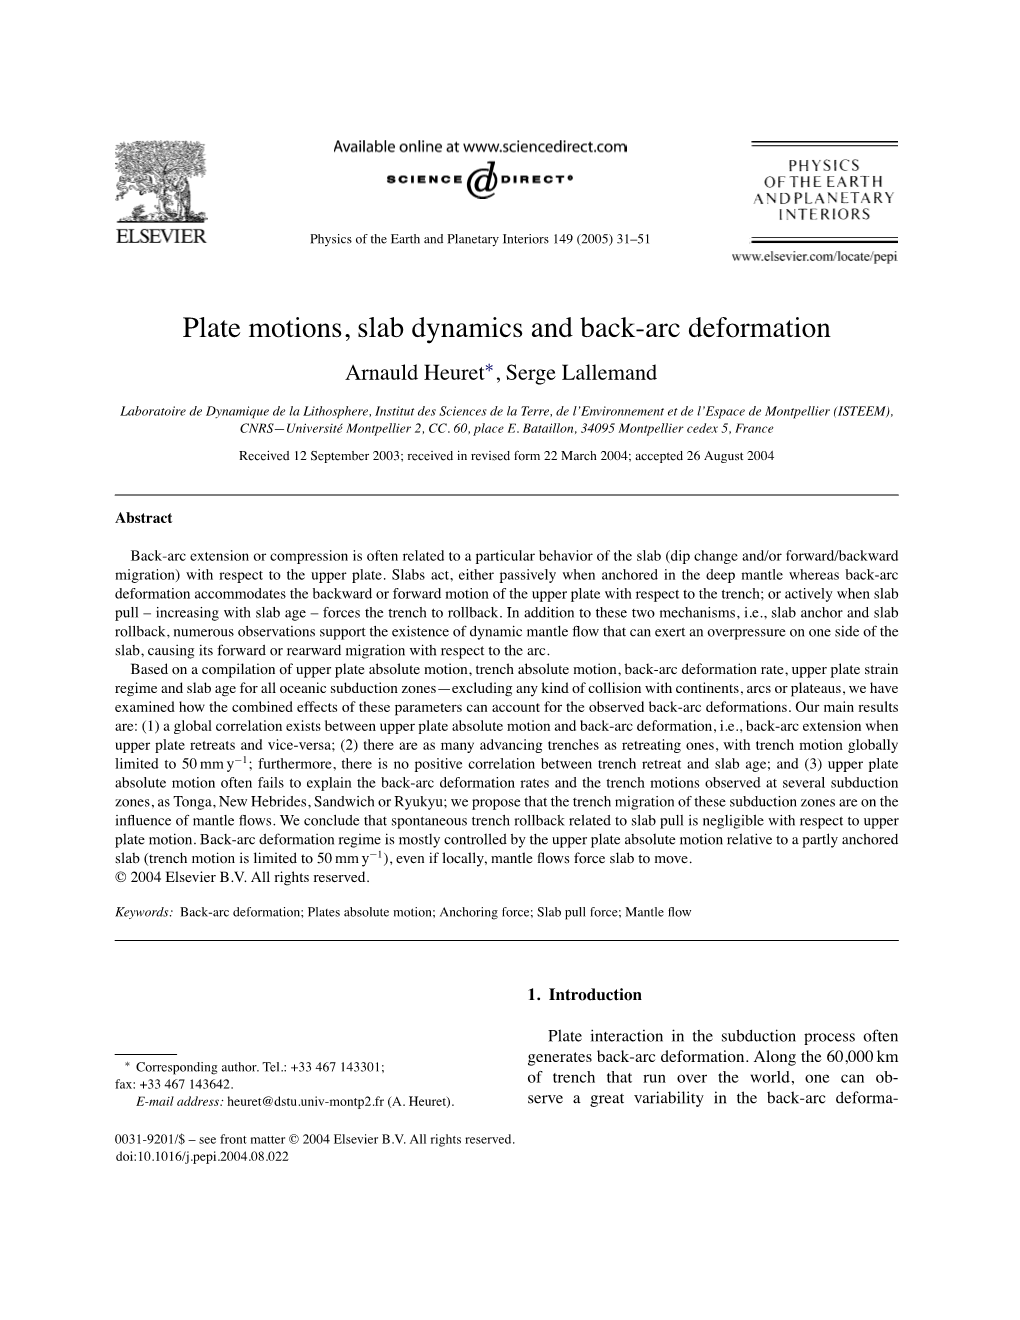 Plate Motions, Slab Dynamics and Back-Arc Deformation